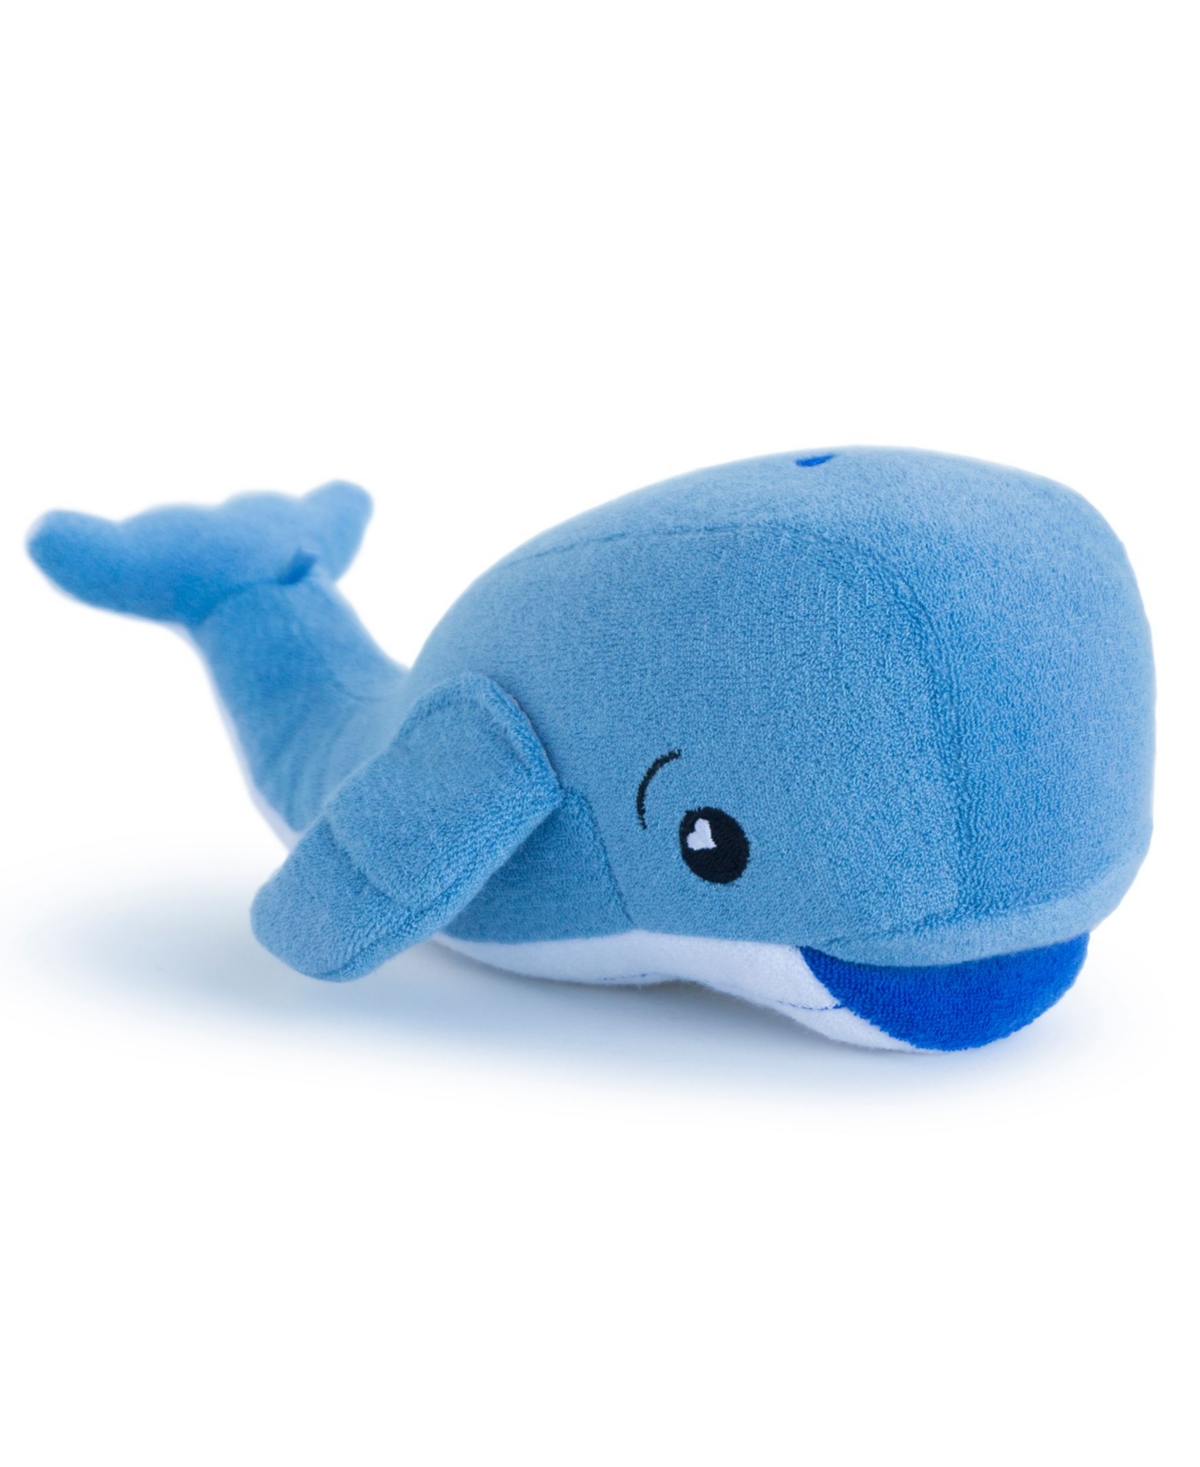 Soapsox Babies' Jackson The Whale Bath Toy Sponge In Blue